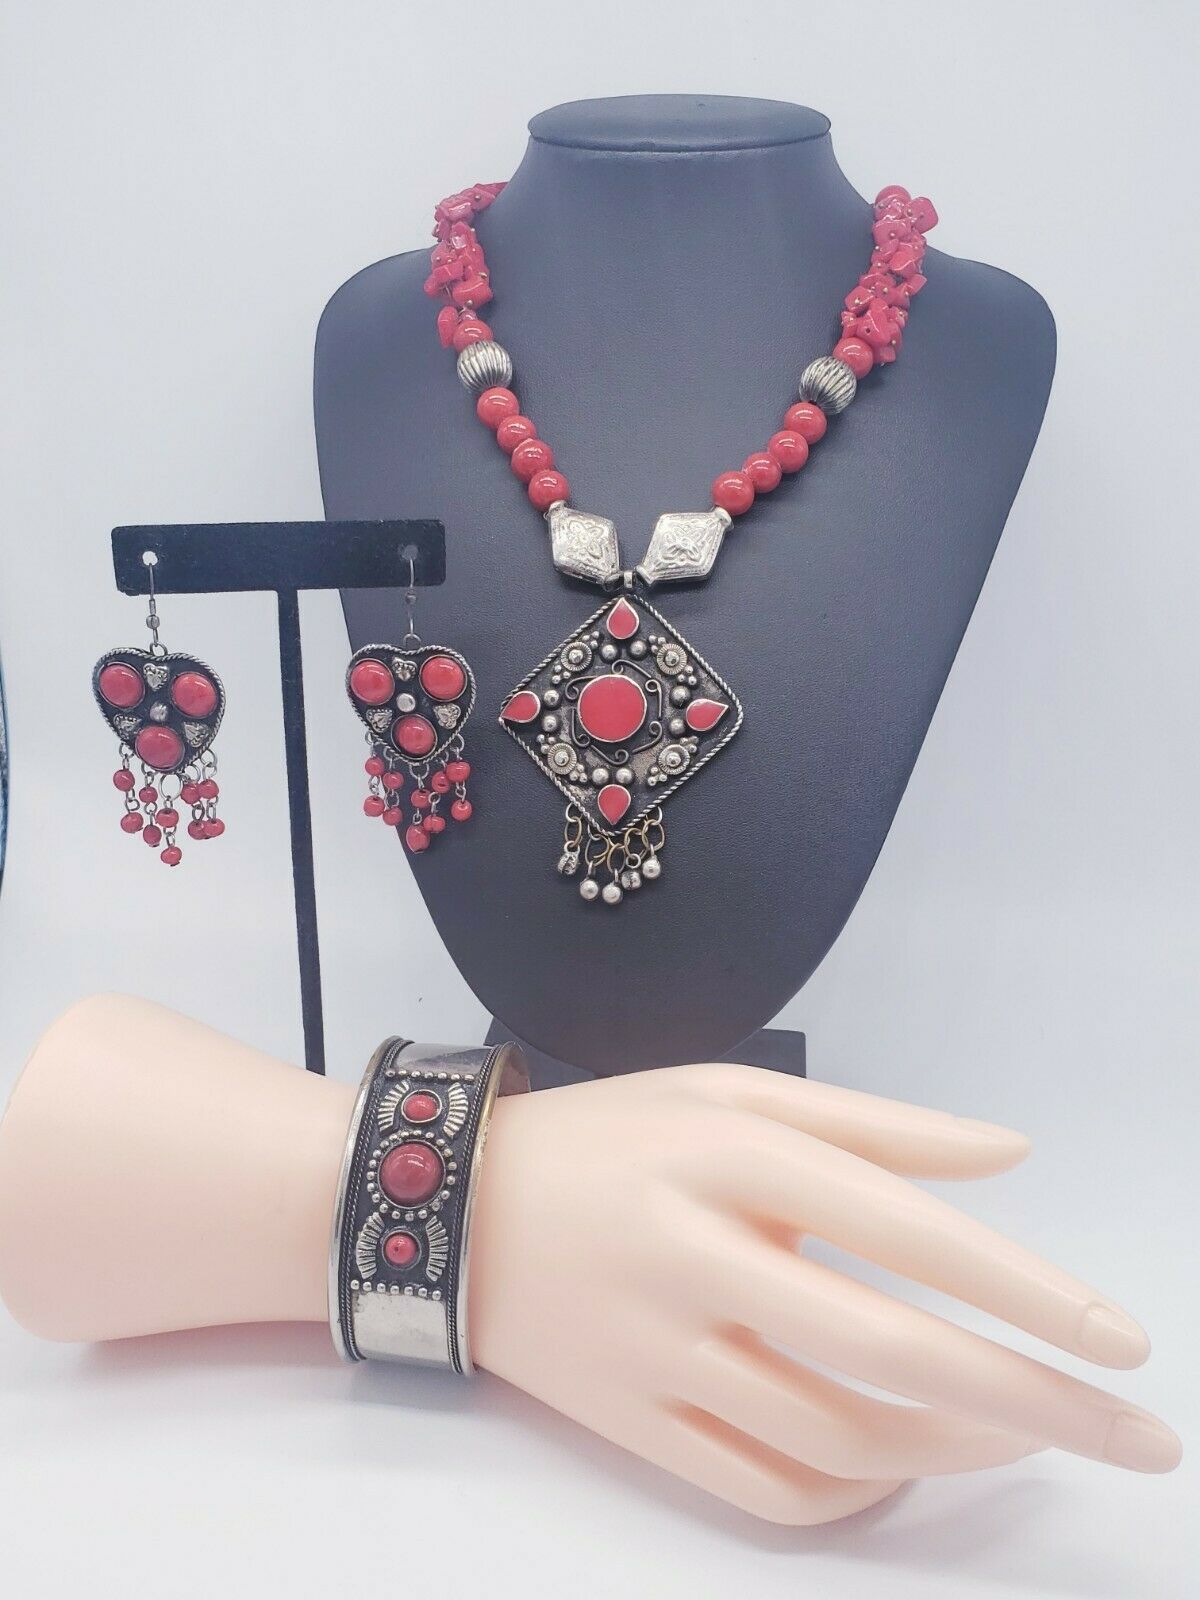 Handmade In Afghanistan Silver Tone & Red Beads Necklace Bracelet & Earrings Set